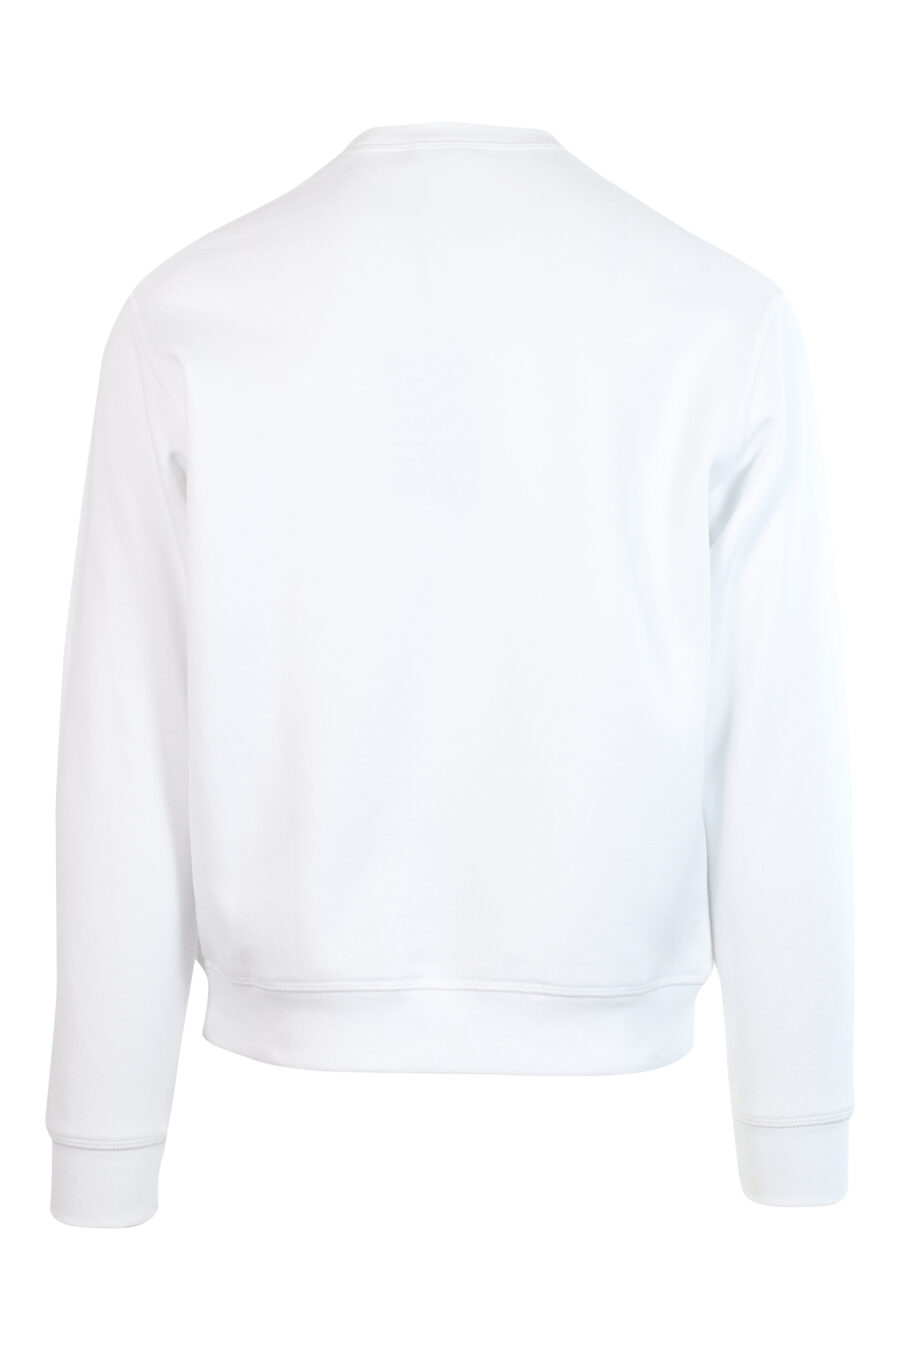 White sweatshirt with "icon pixeled" maxilogo in turquoise and fuchsia - 8052134982228 2